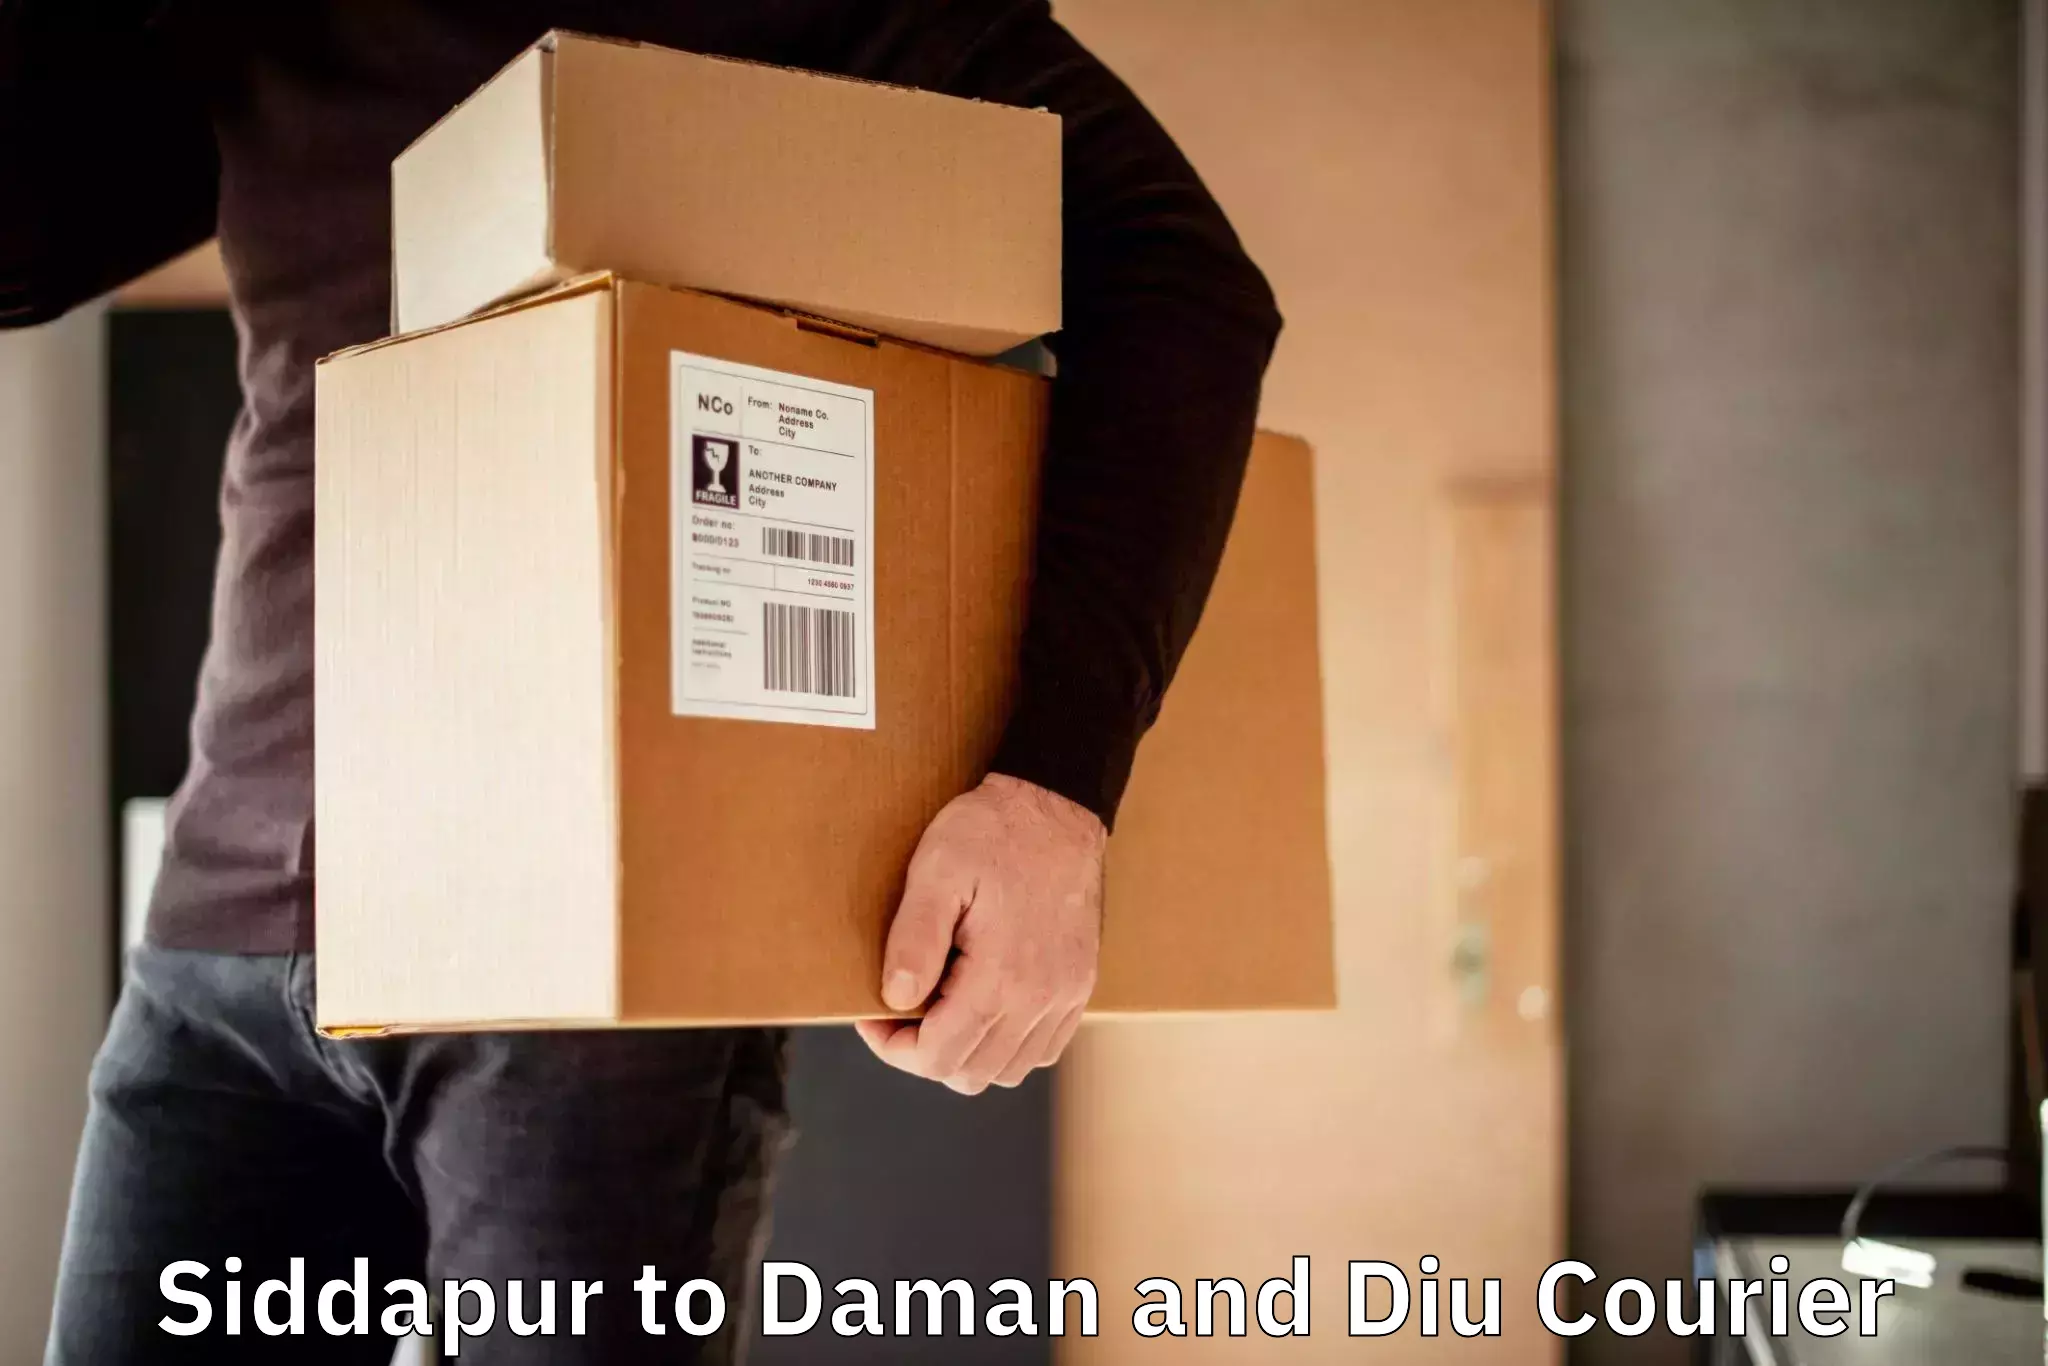 Global shipping networks Siddapur to Daman and Diu